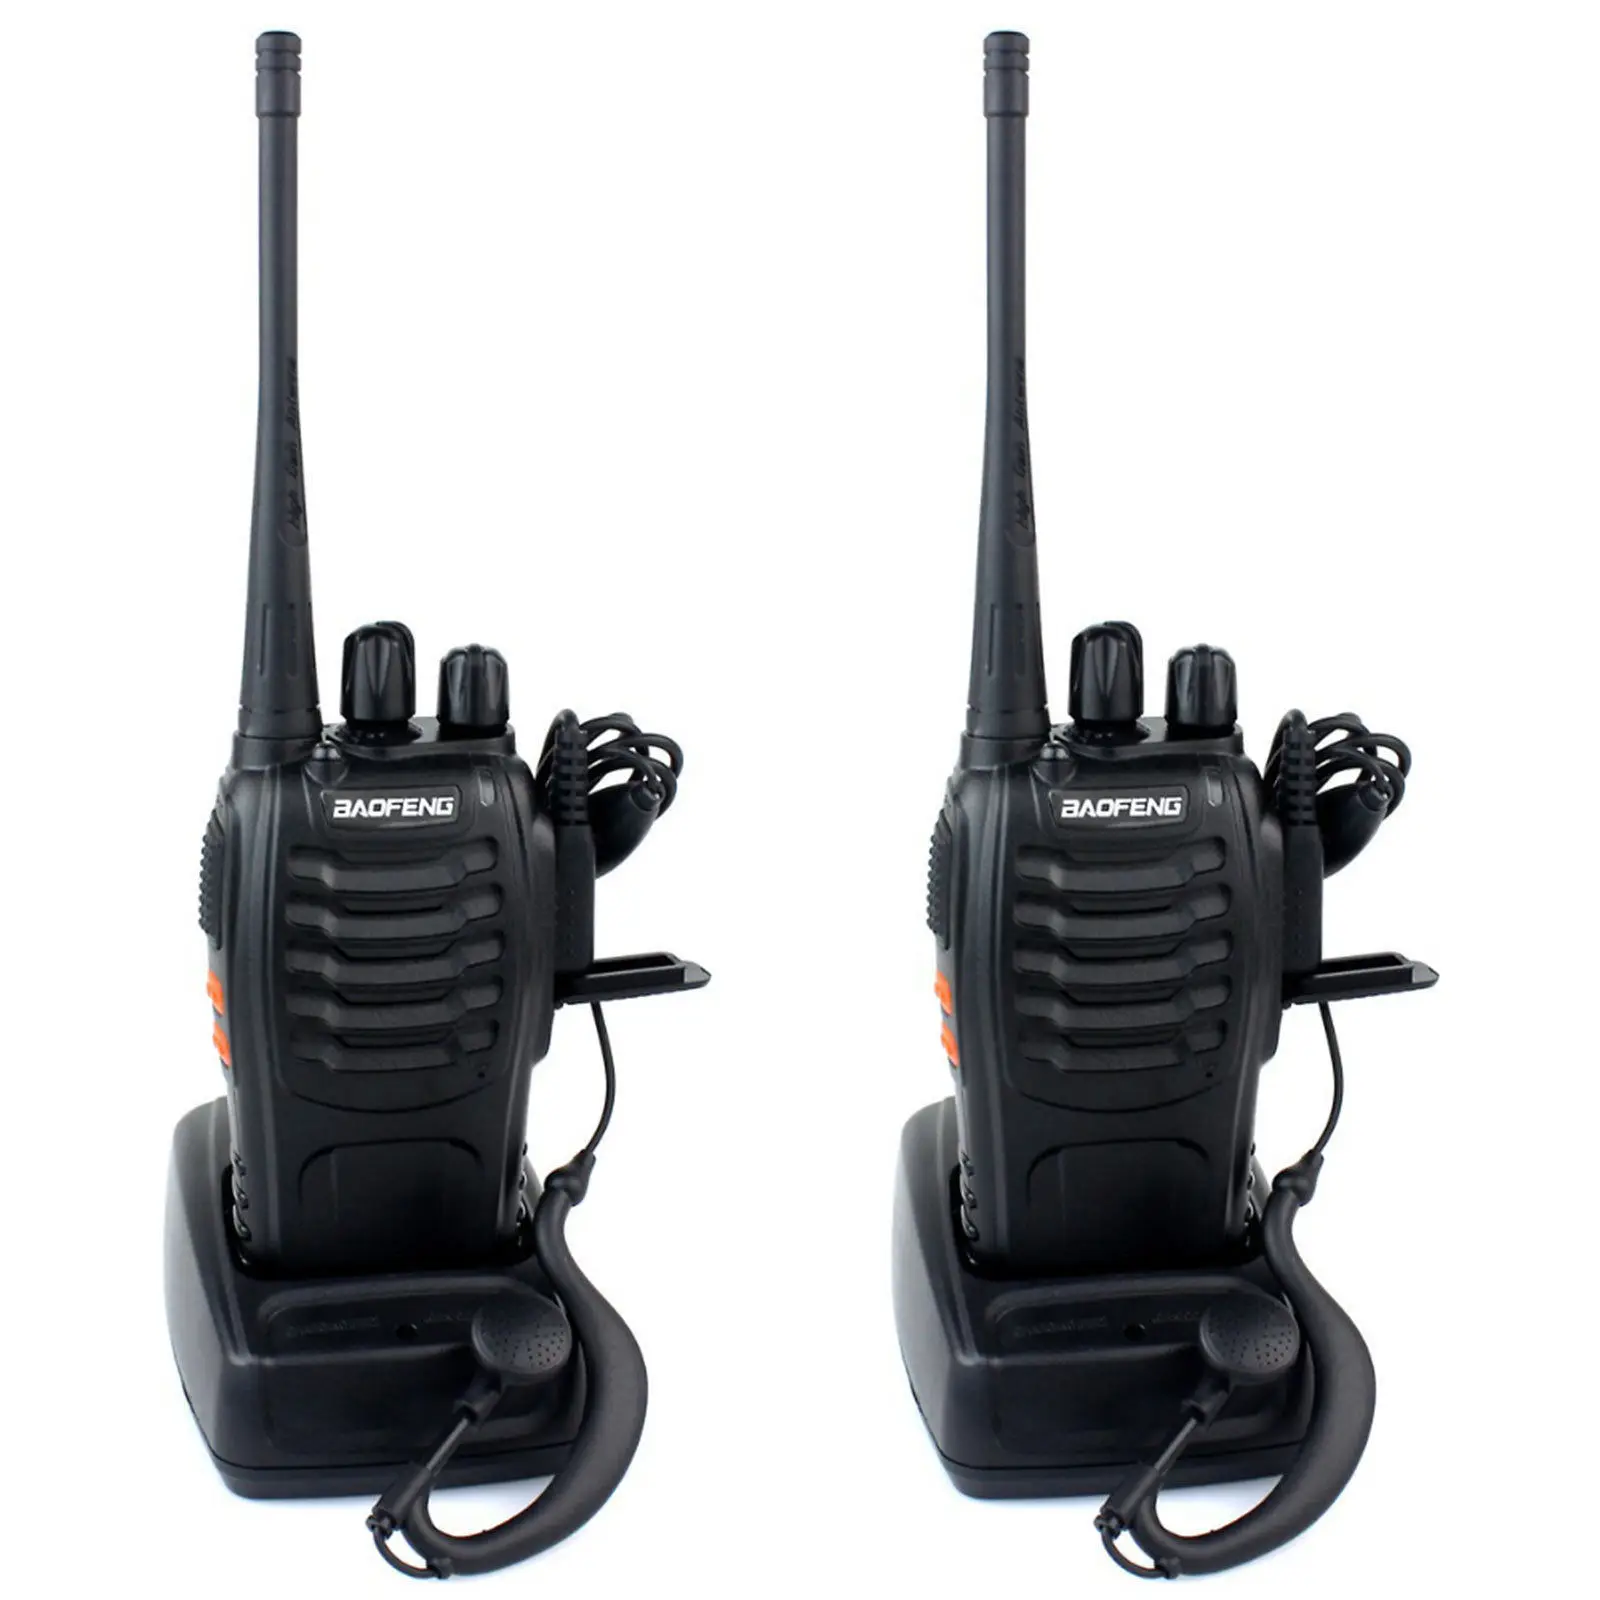 

UHF baofeng bf 888s two way radio Handheld Transceiver Portable Radio wireless intercom 5km walkie talkie radio communicator, Black